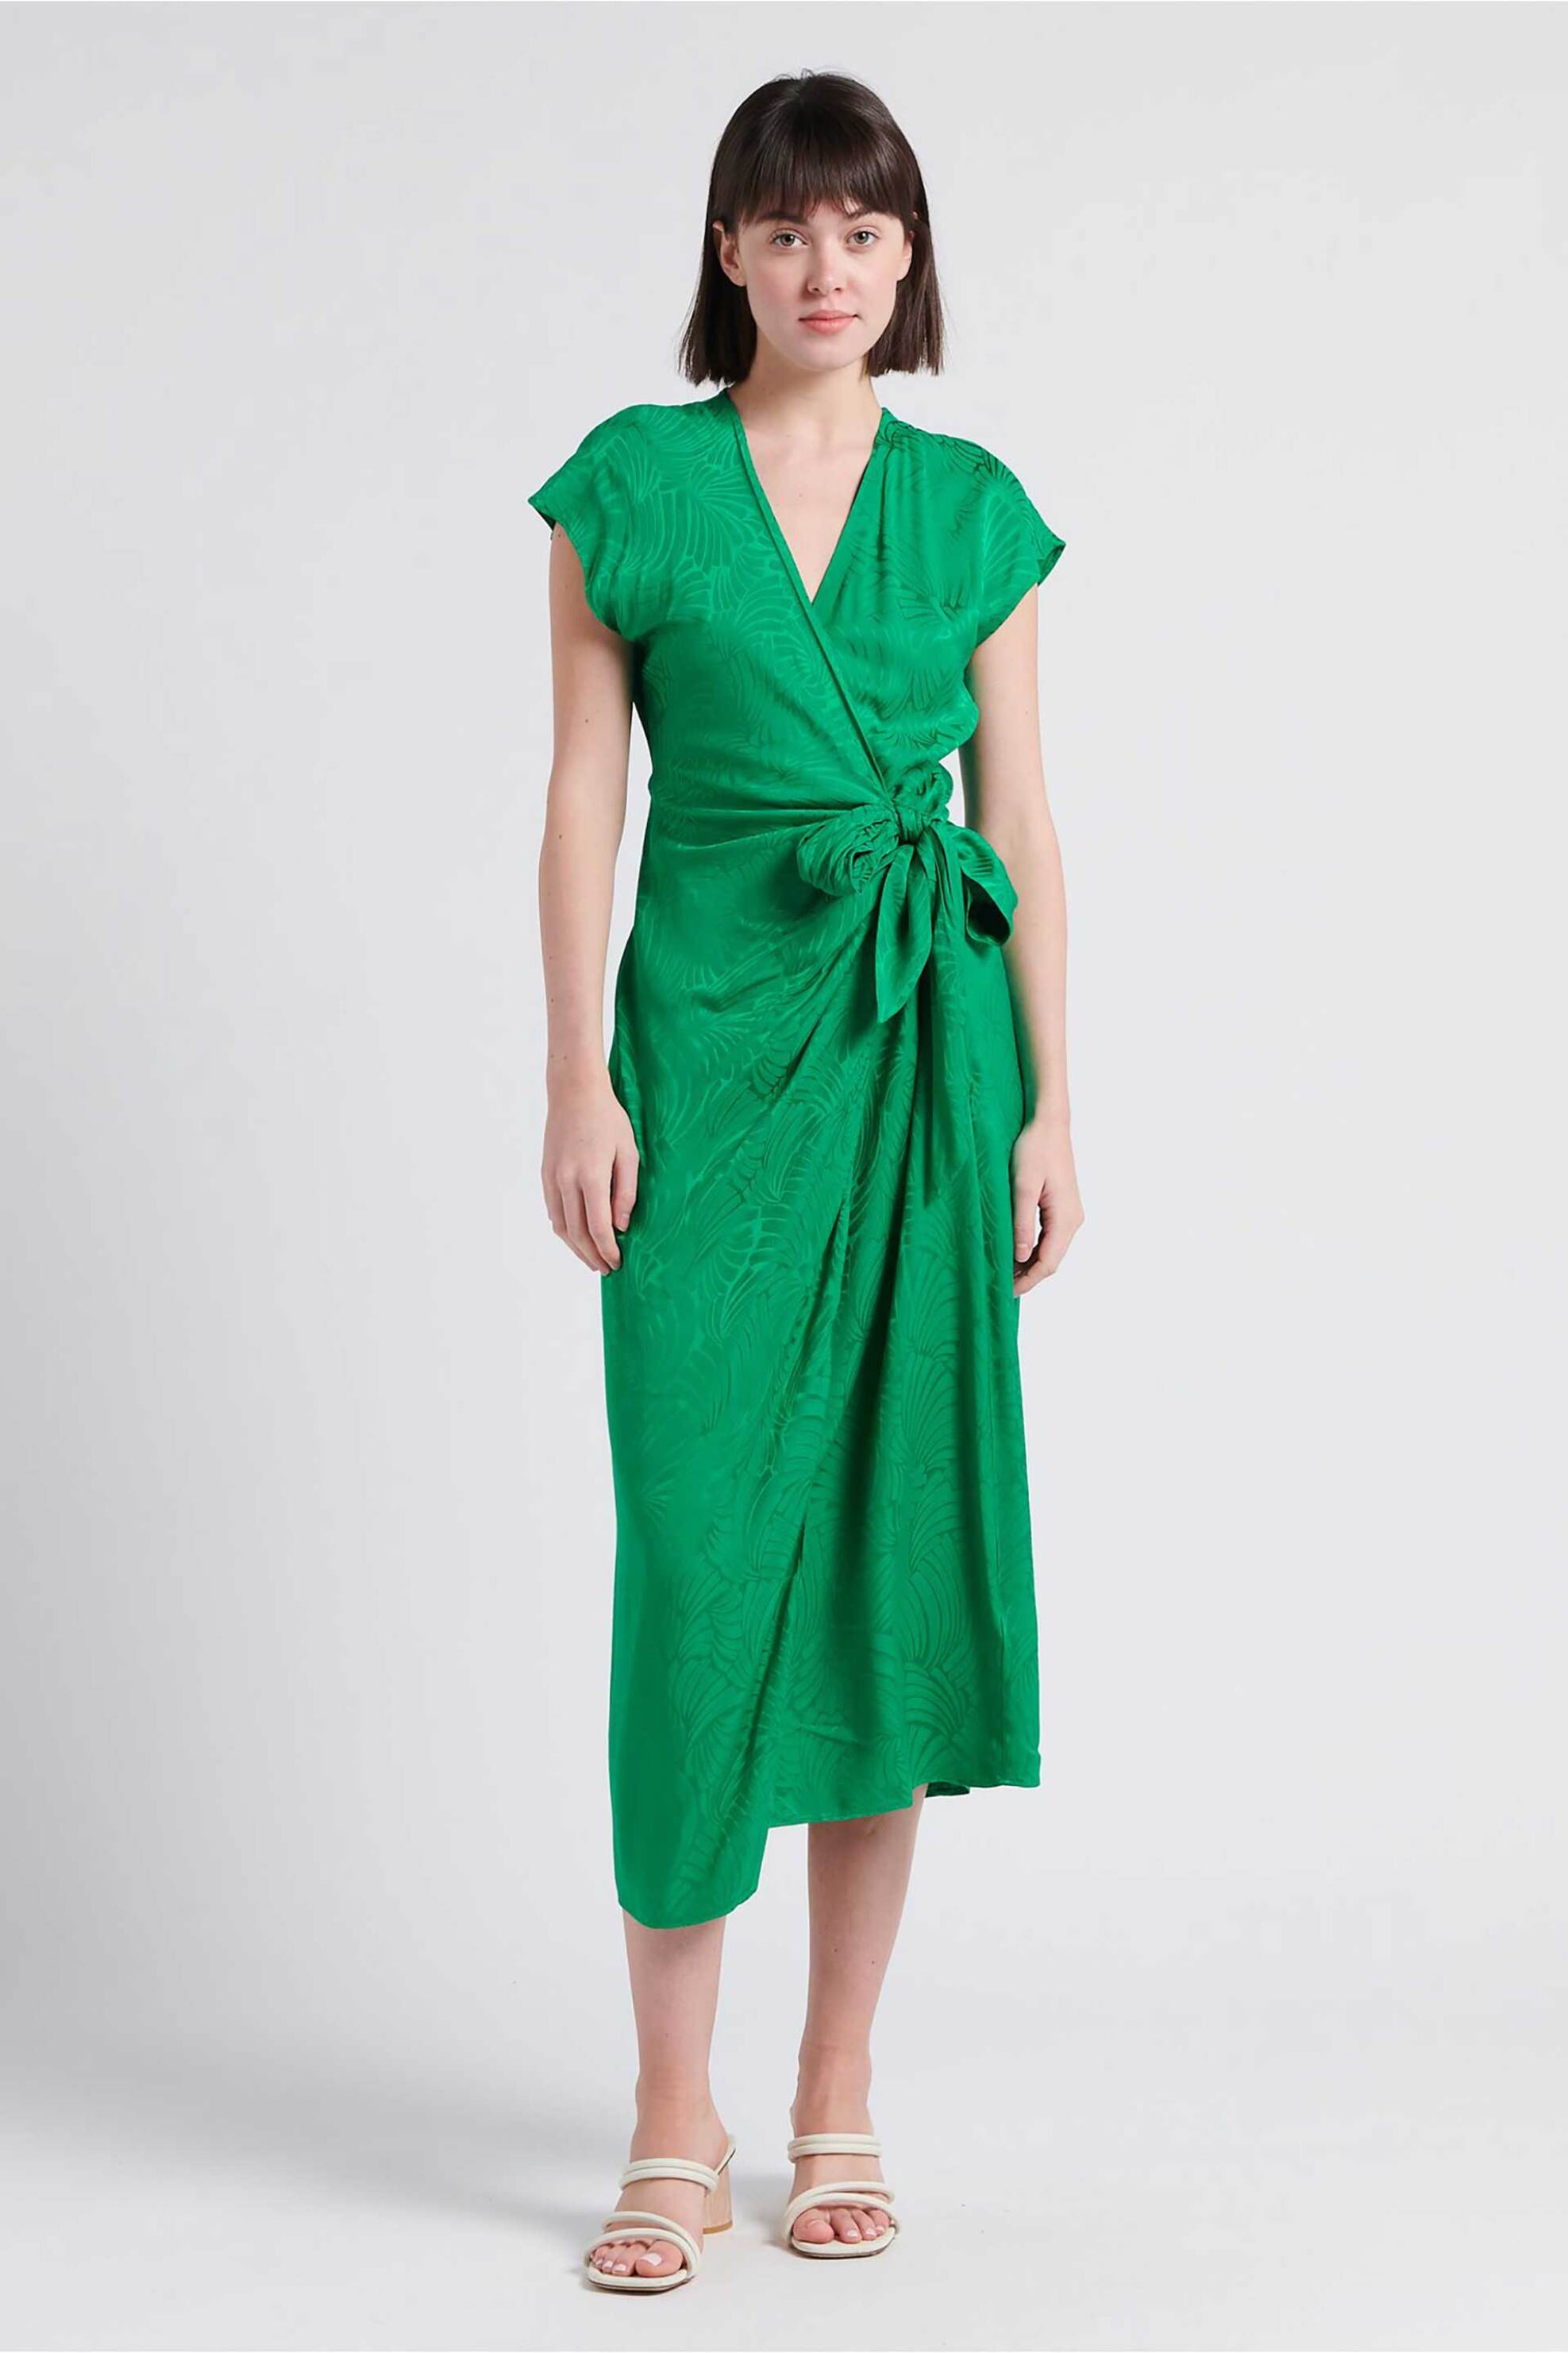 Suncoo γυναικείο midi φόρεμα κρουαζέ με ζακάρ σχέδιο - C03134E24 Πράσινο 9-4973000119|EC3528|T1